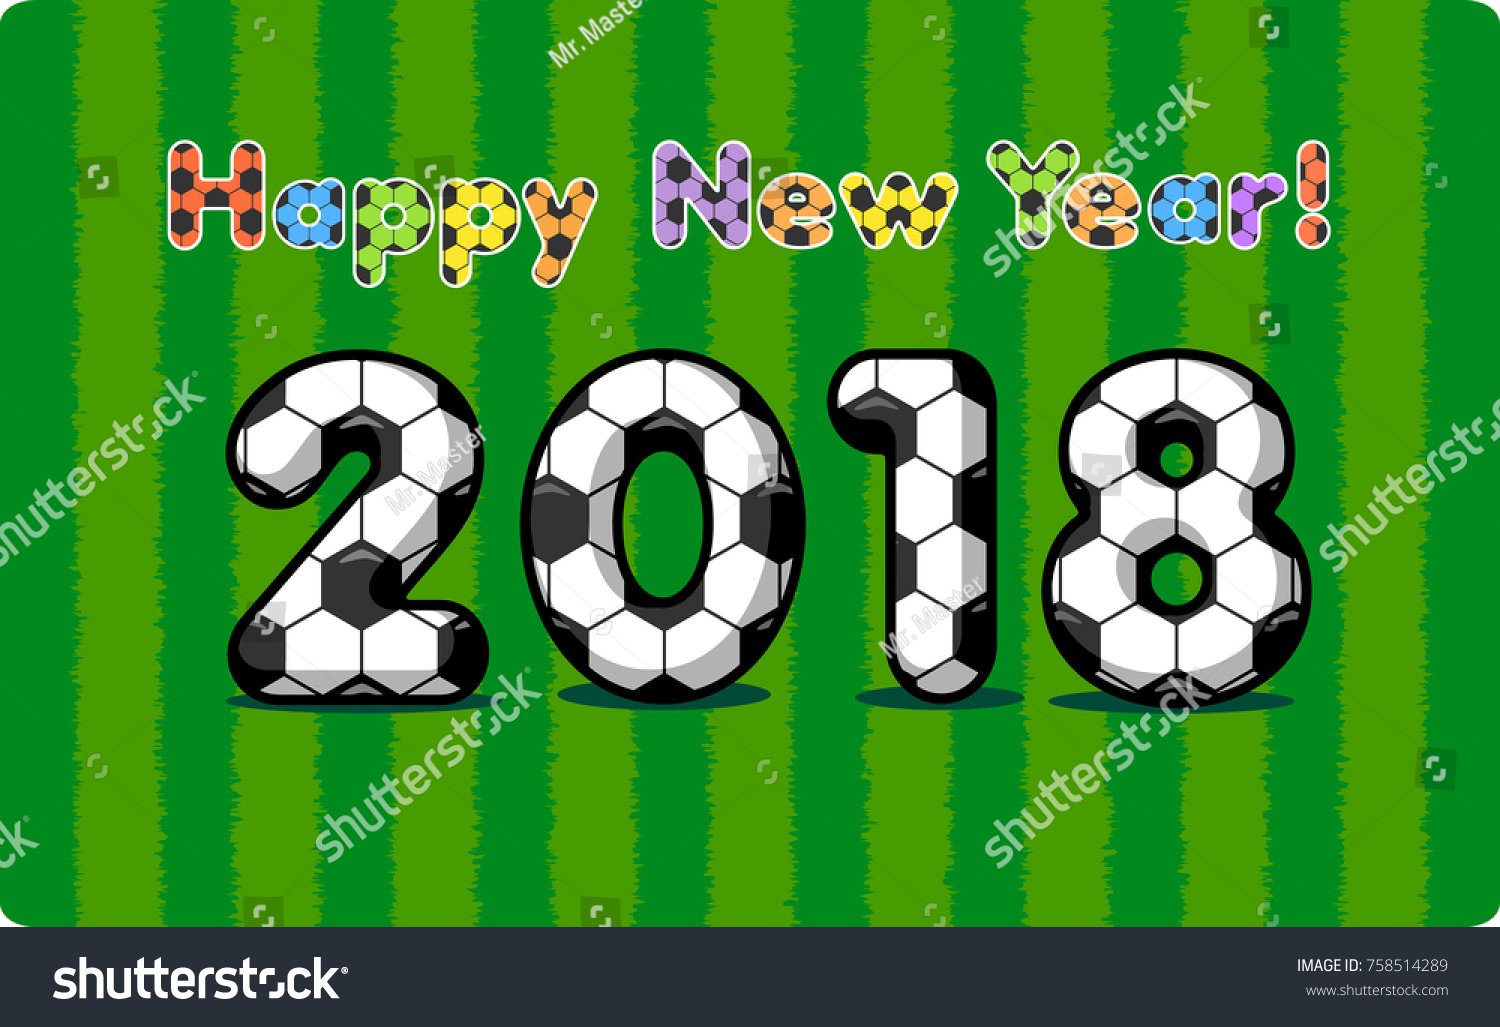 New year football - 28 images - photo phnia 2015 new year 